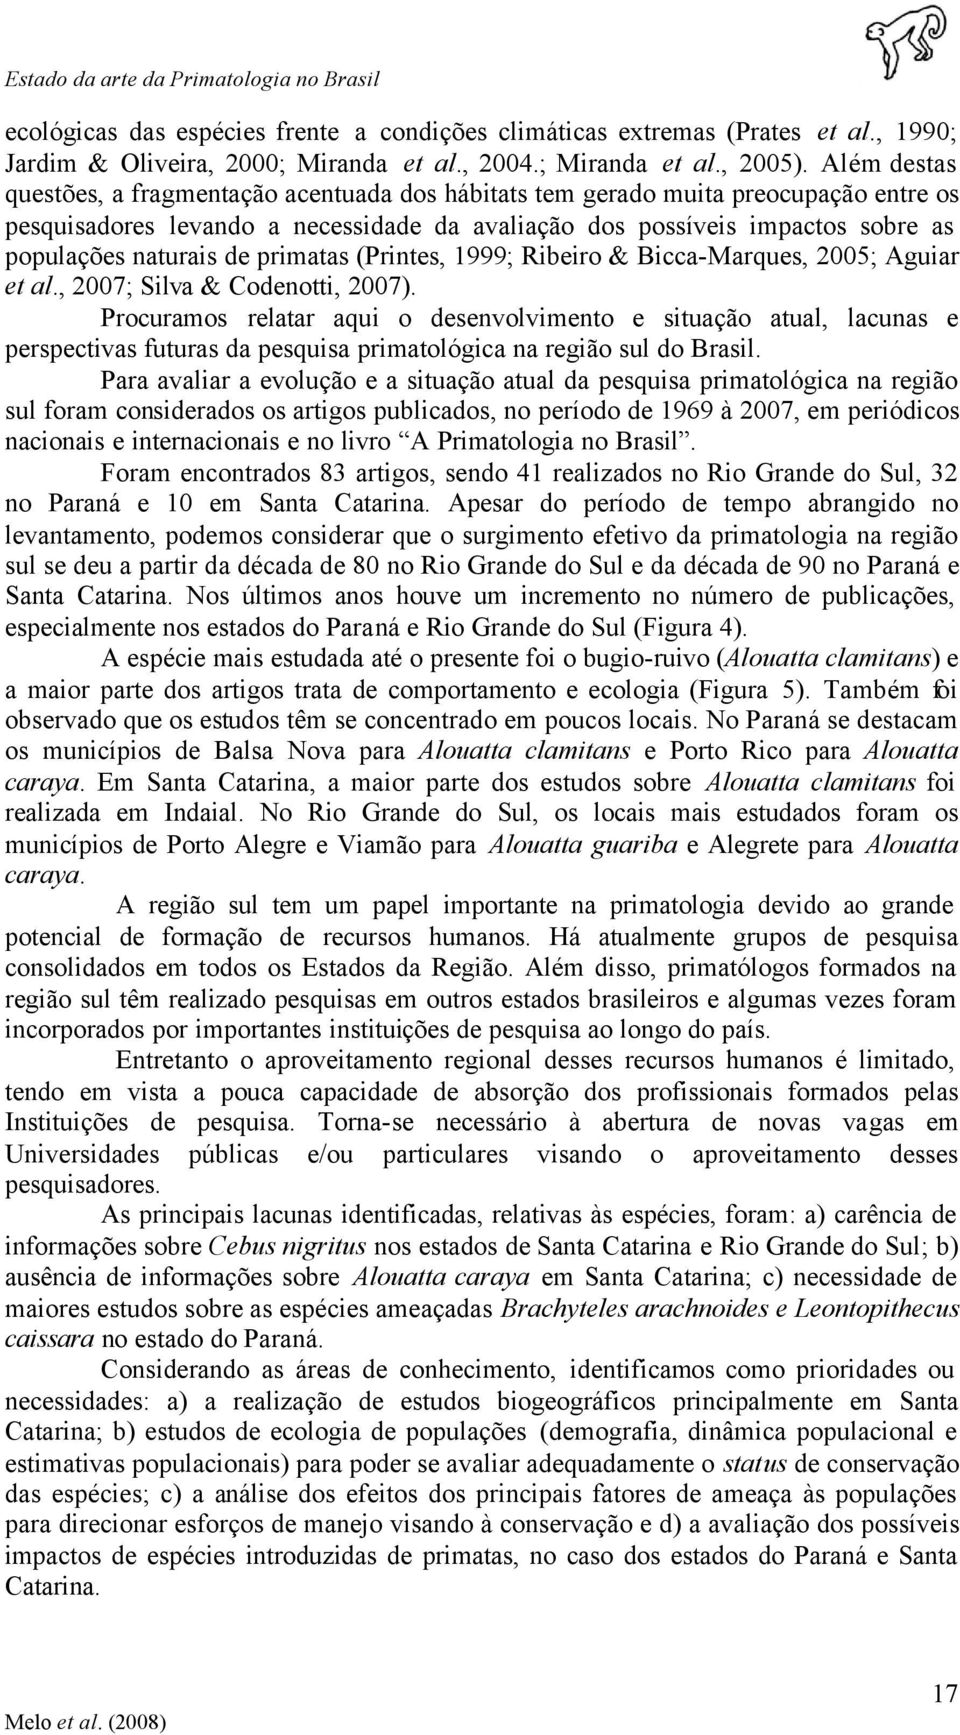 de primatas (Printes, 1999; Ribeiro & Bicca-Marques, 2005; Aguiar et al., 2007; Silva & Codenotti, 2007).